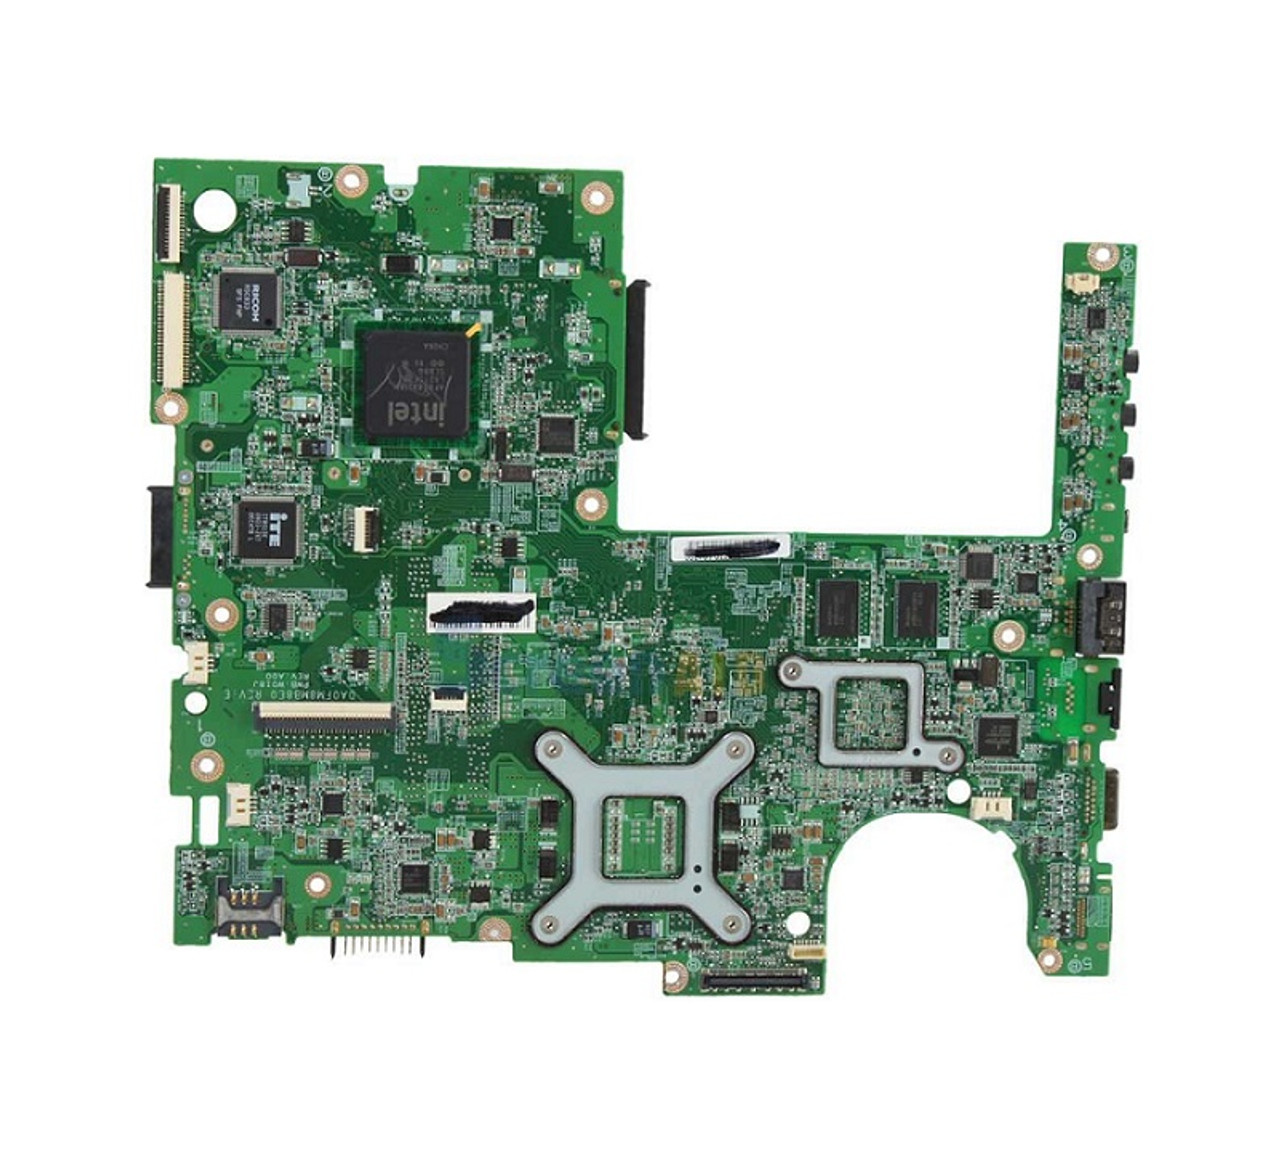 A000023270 - Toshiba Laptop Board for Satellite M305D U405D (Refurbished)